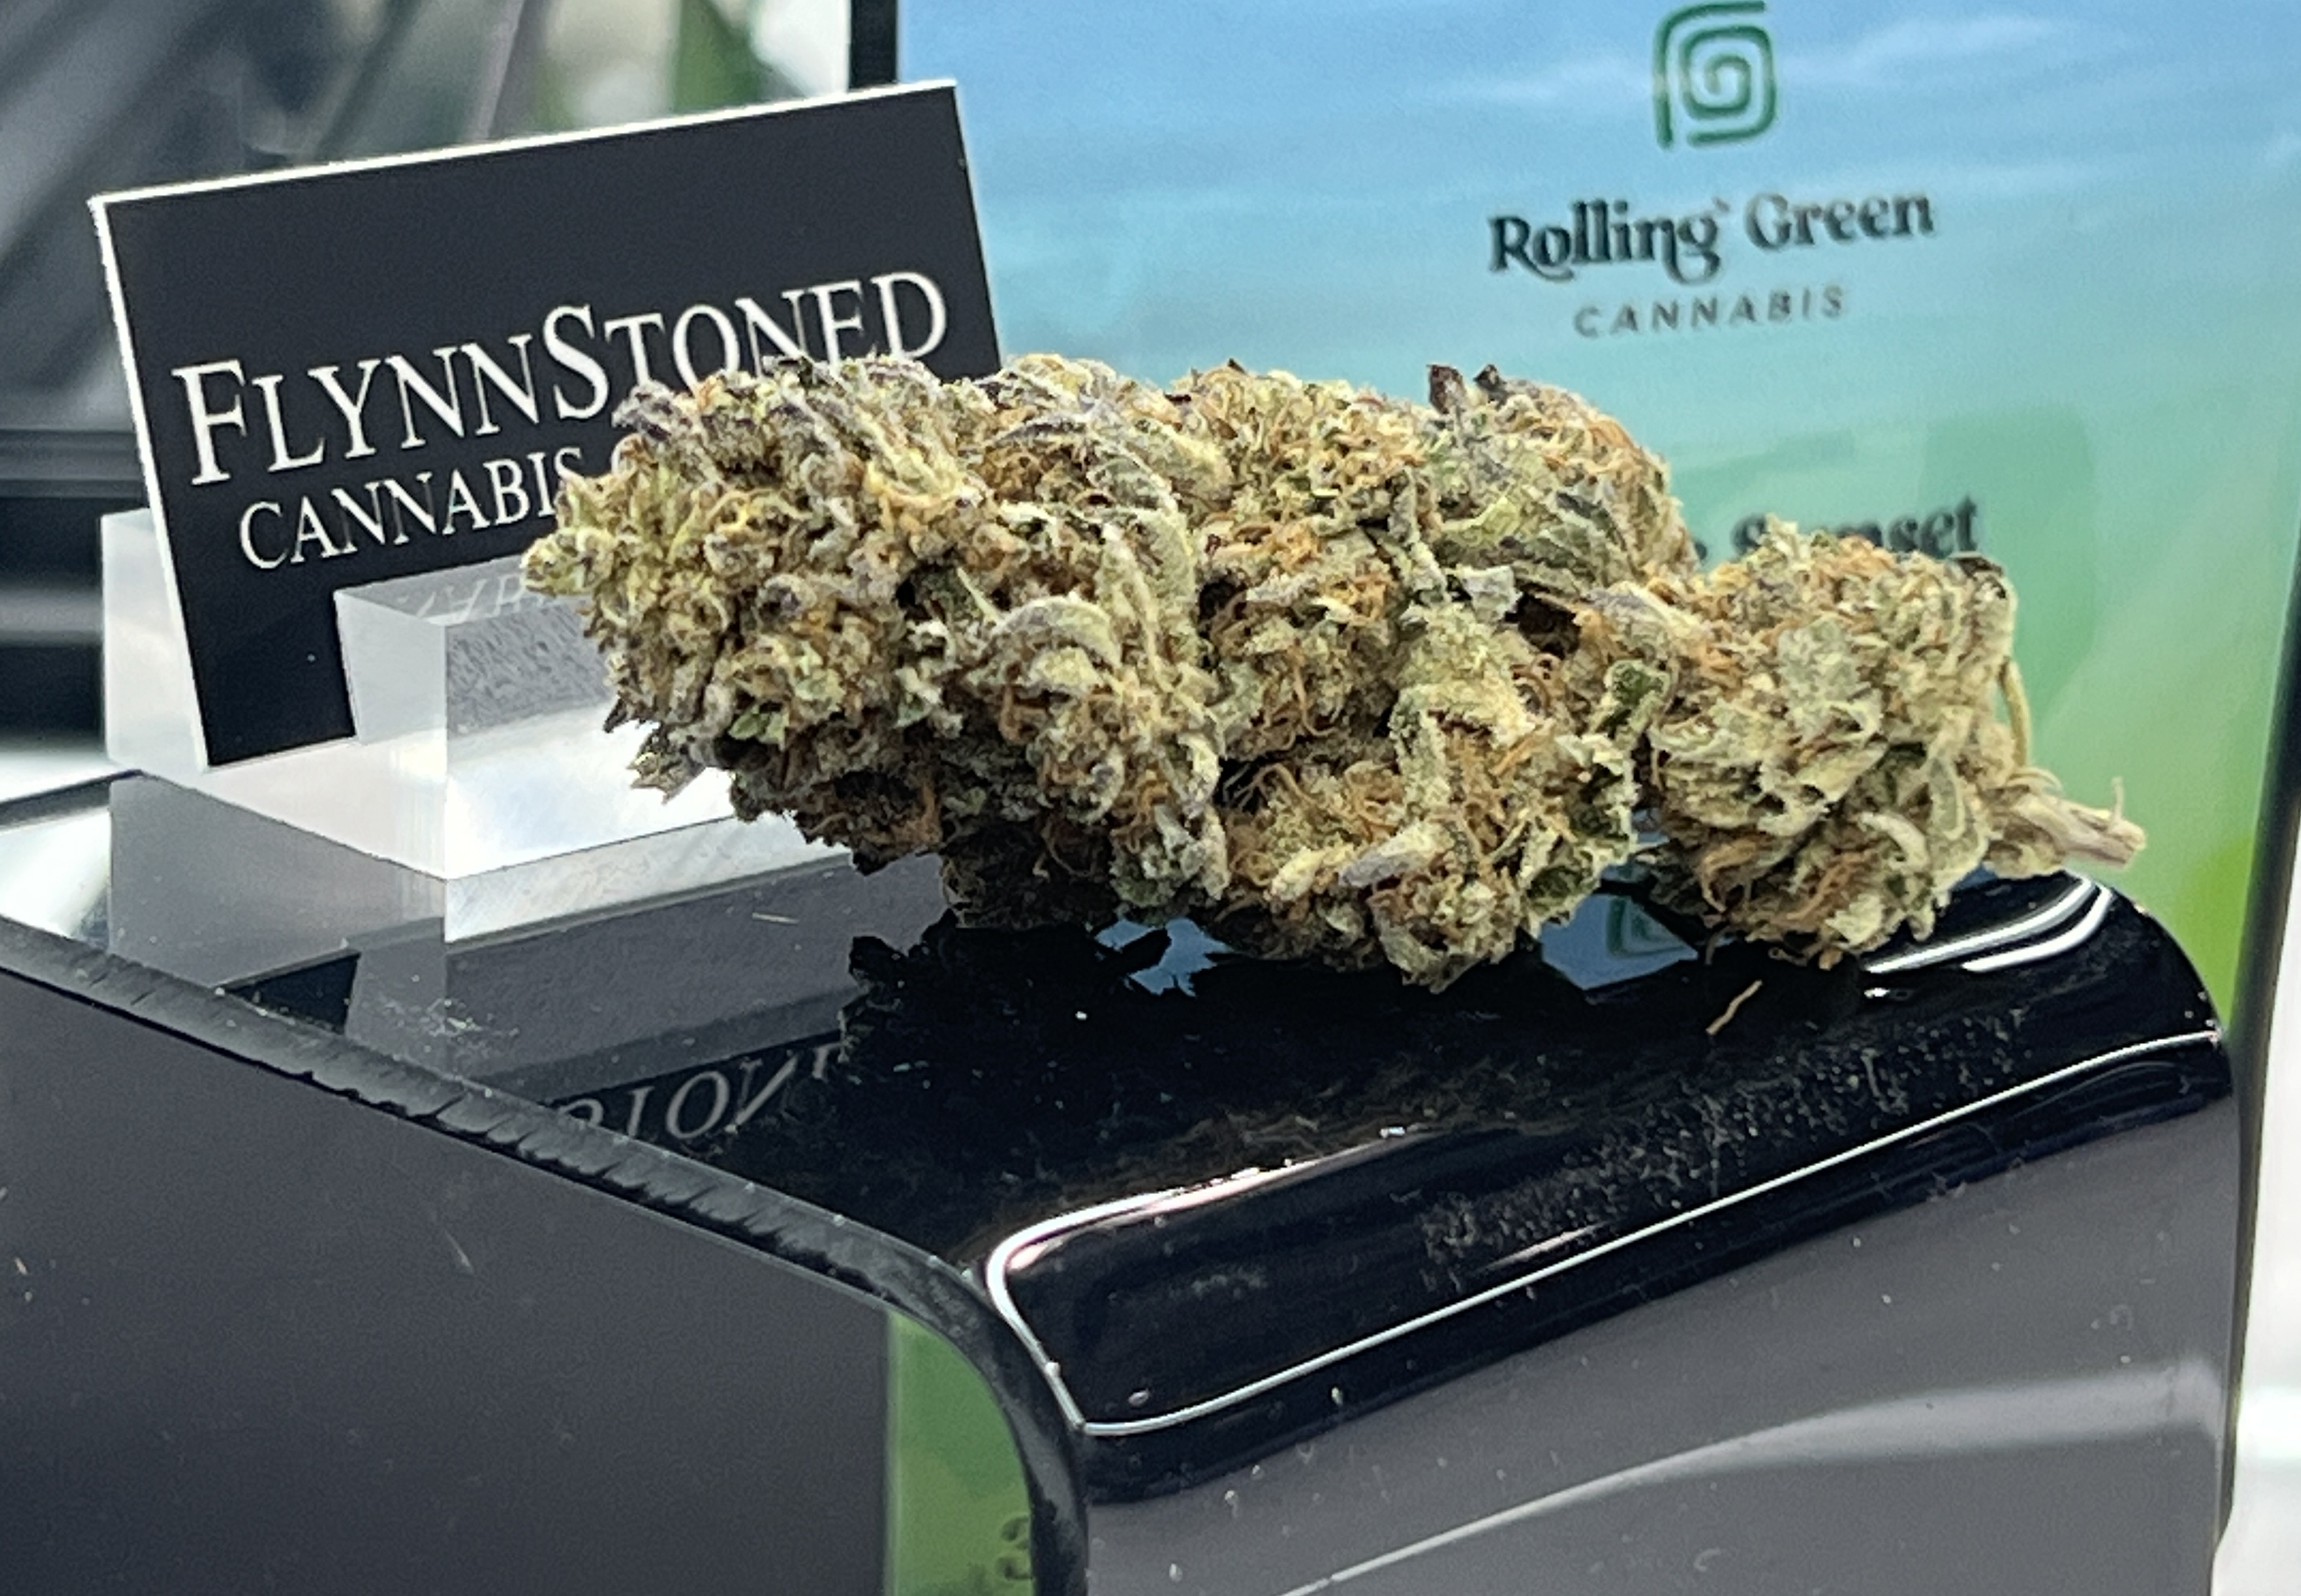 FlynnStoned Cannabis Company Rolls Into Syracuse (Photos)